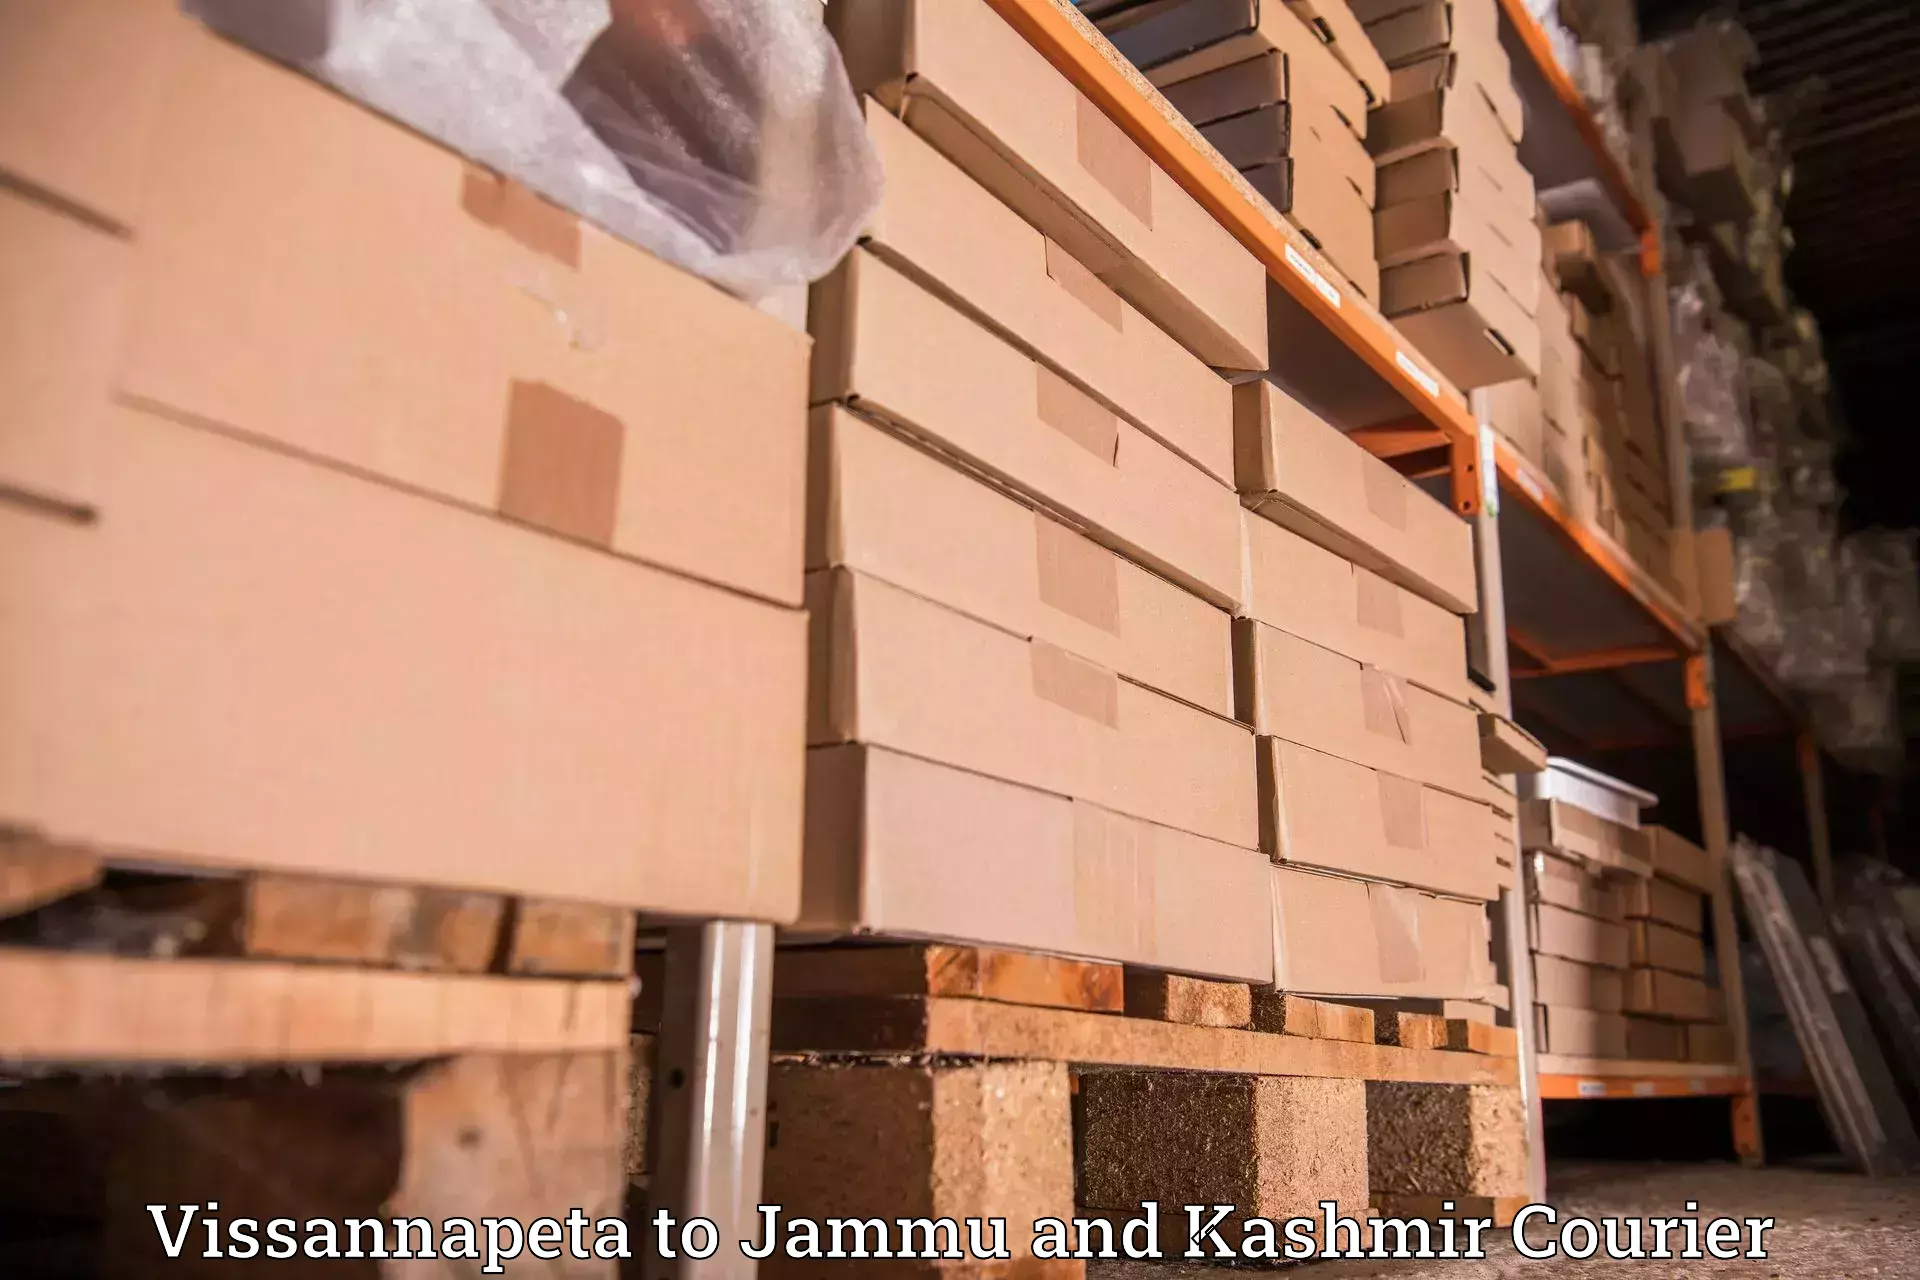 Nationwide delivery network Vissannapeta to Ramban